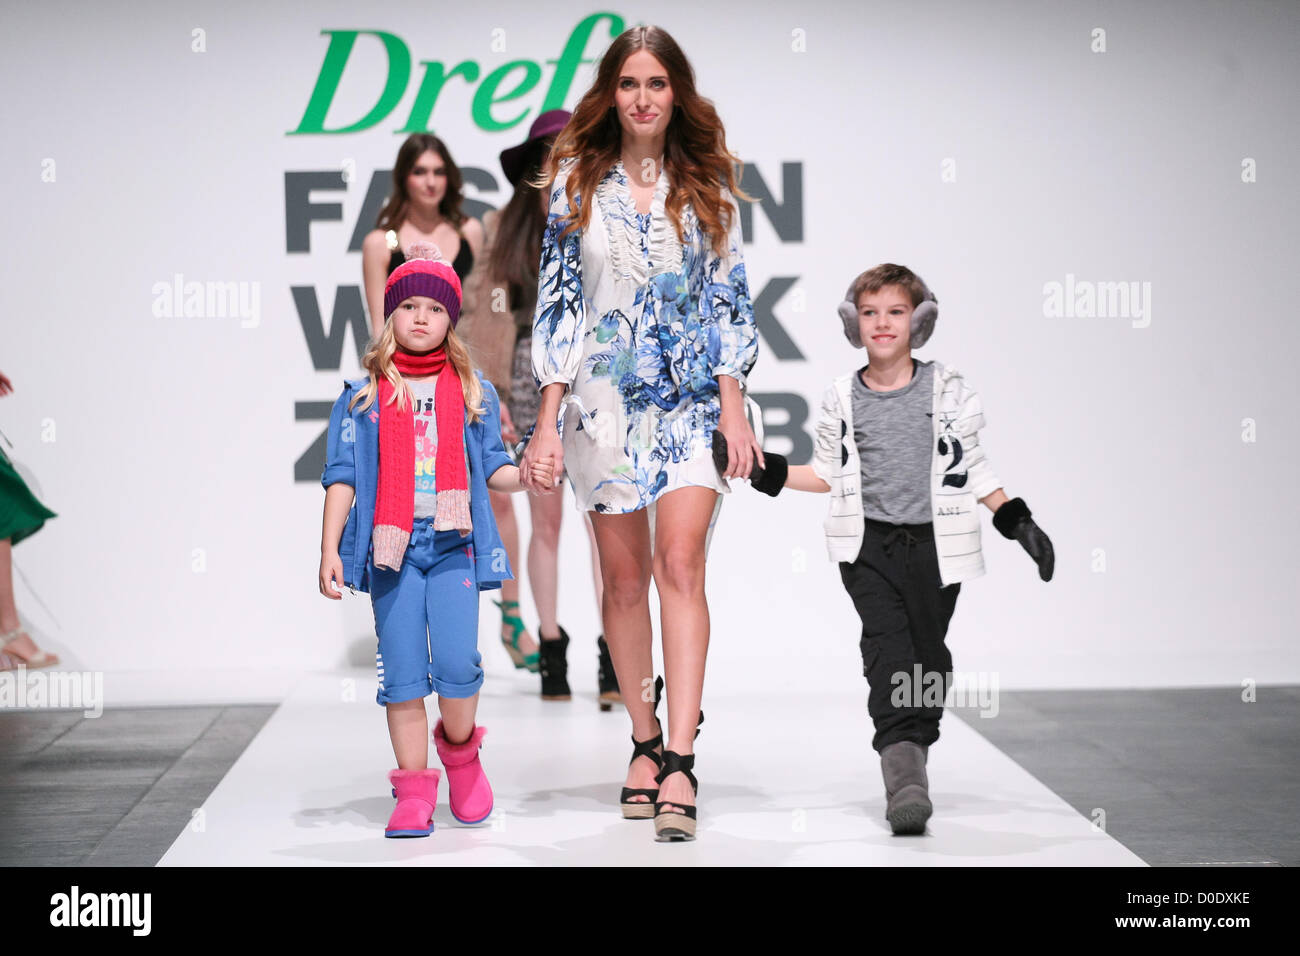 Dreft Fashion Week Zagreb Stock Photo 